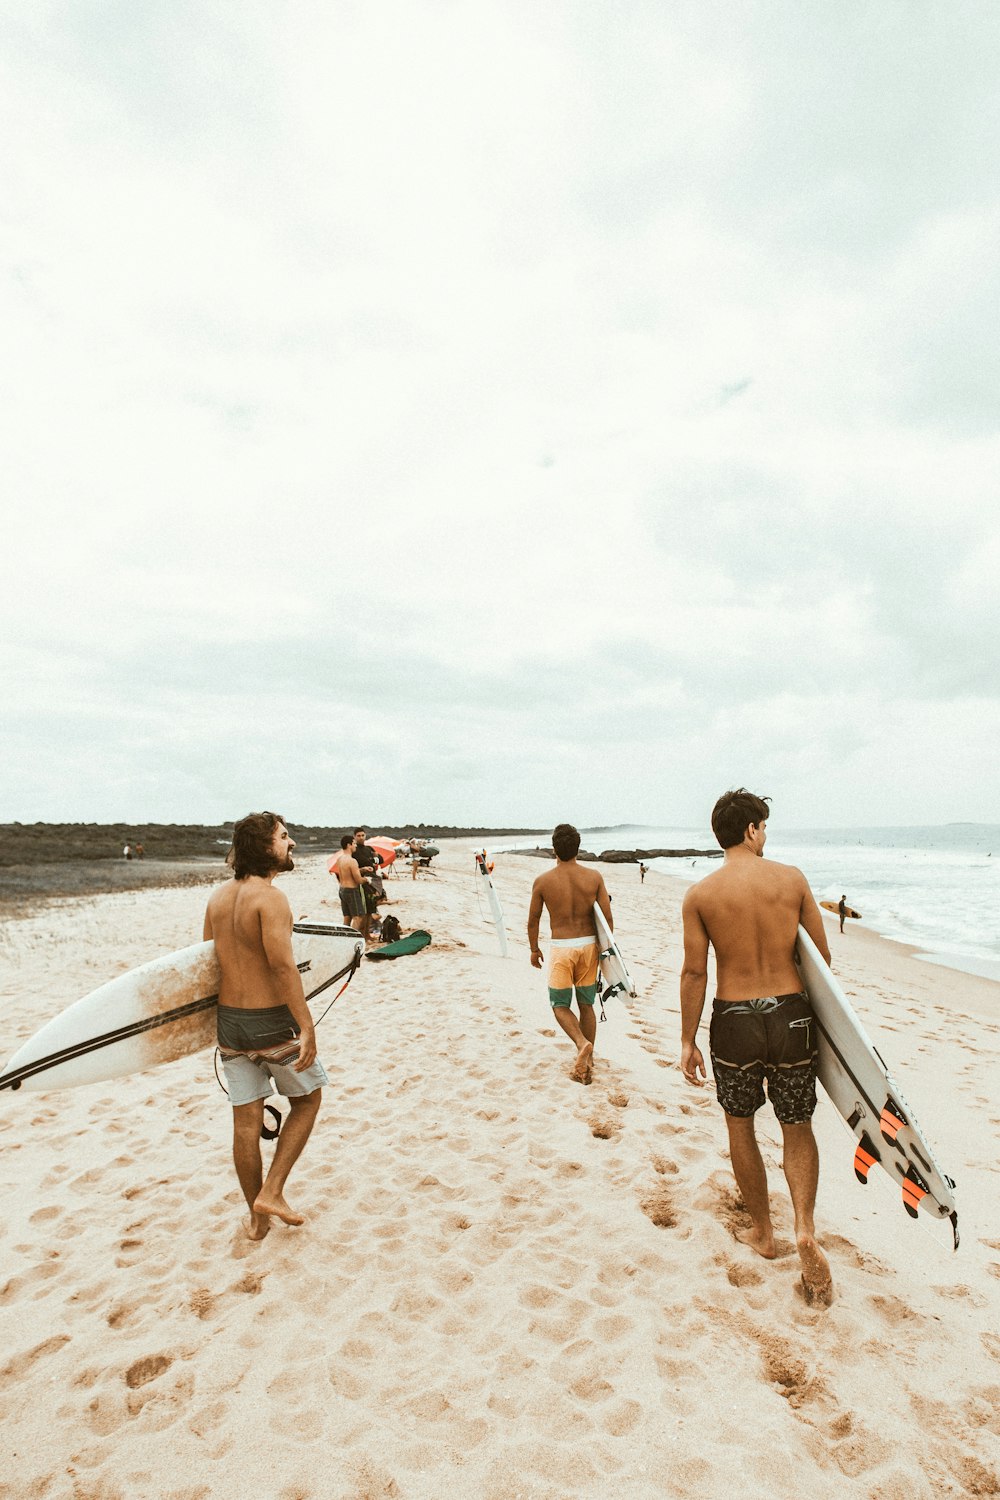 group of surfer walking on seashore